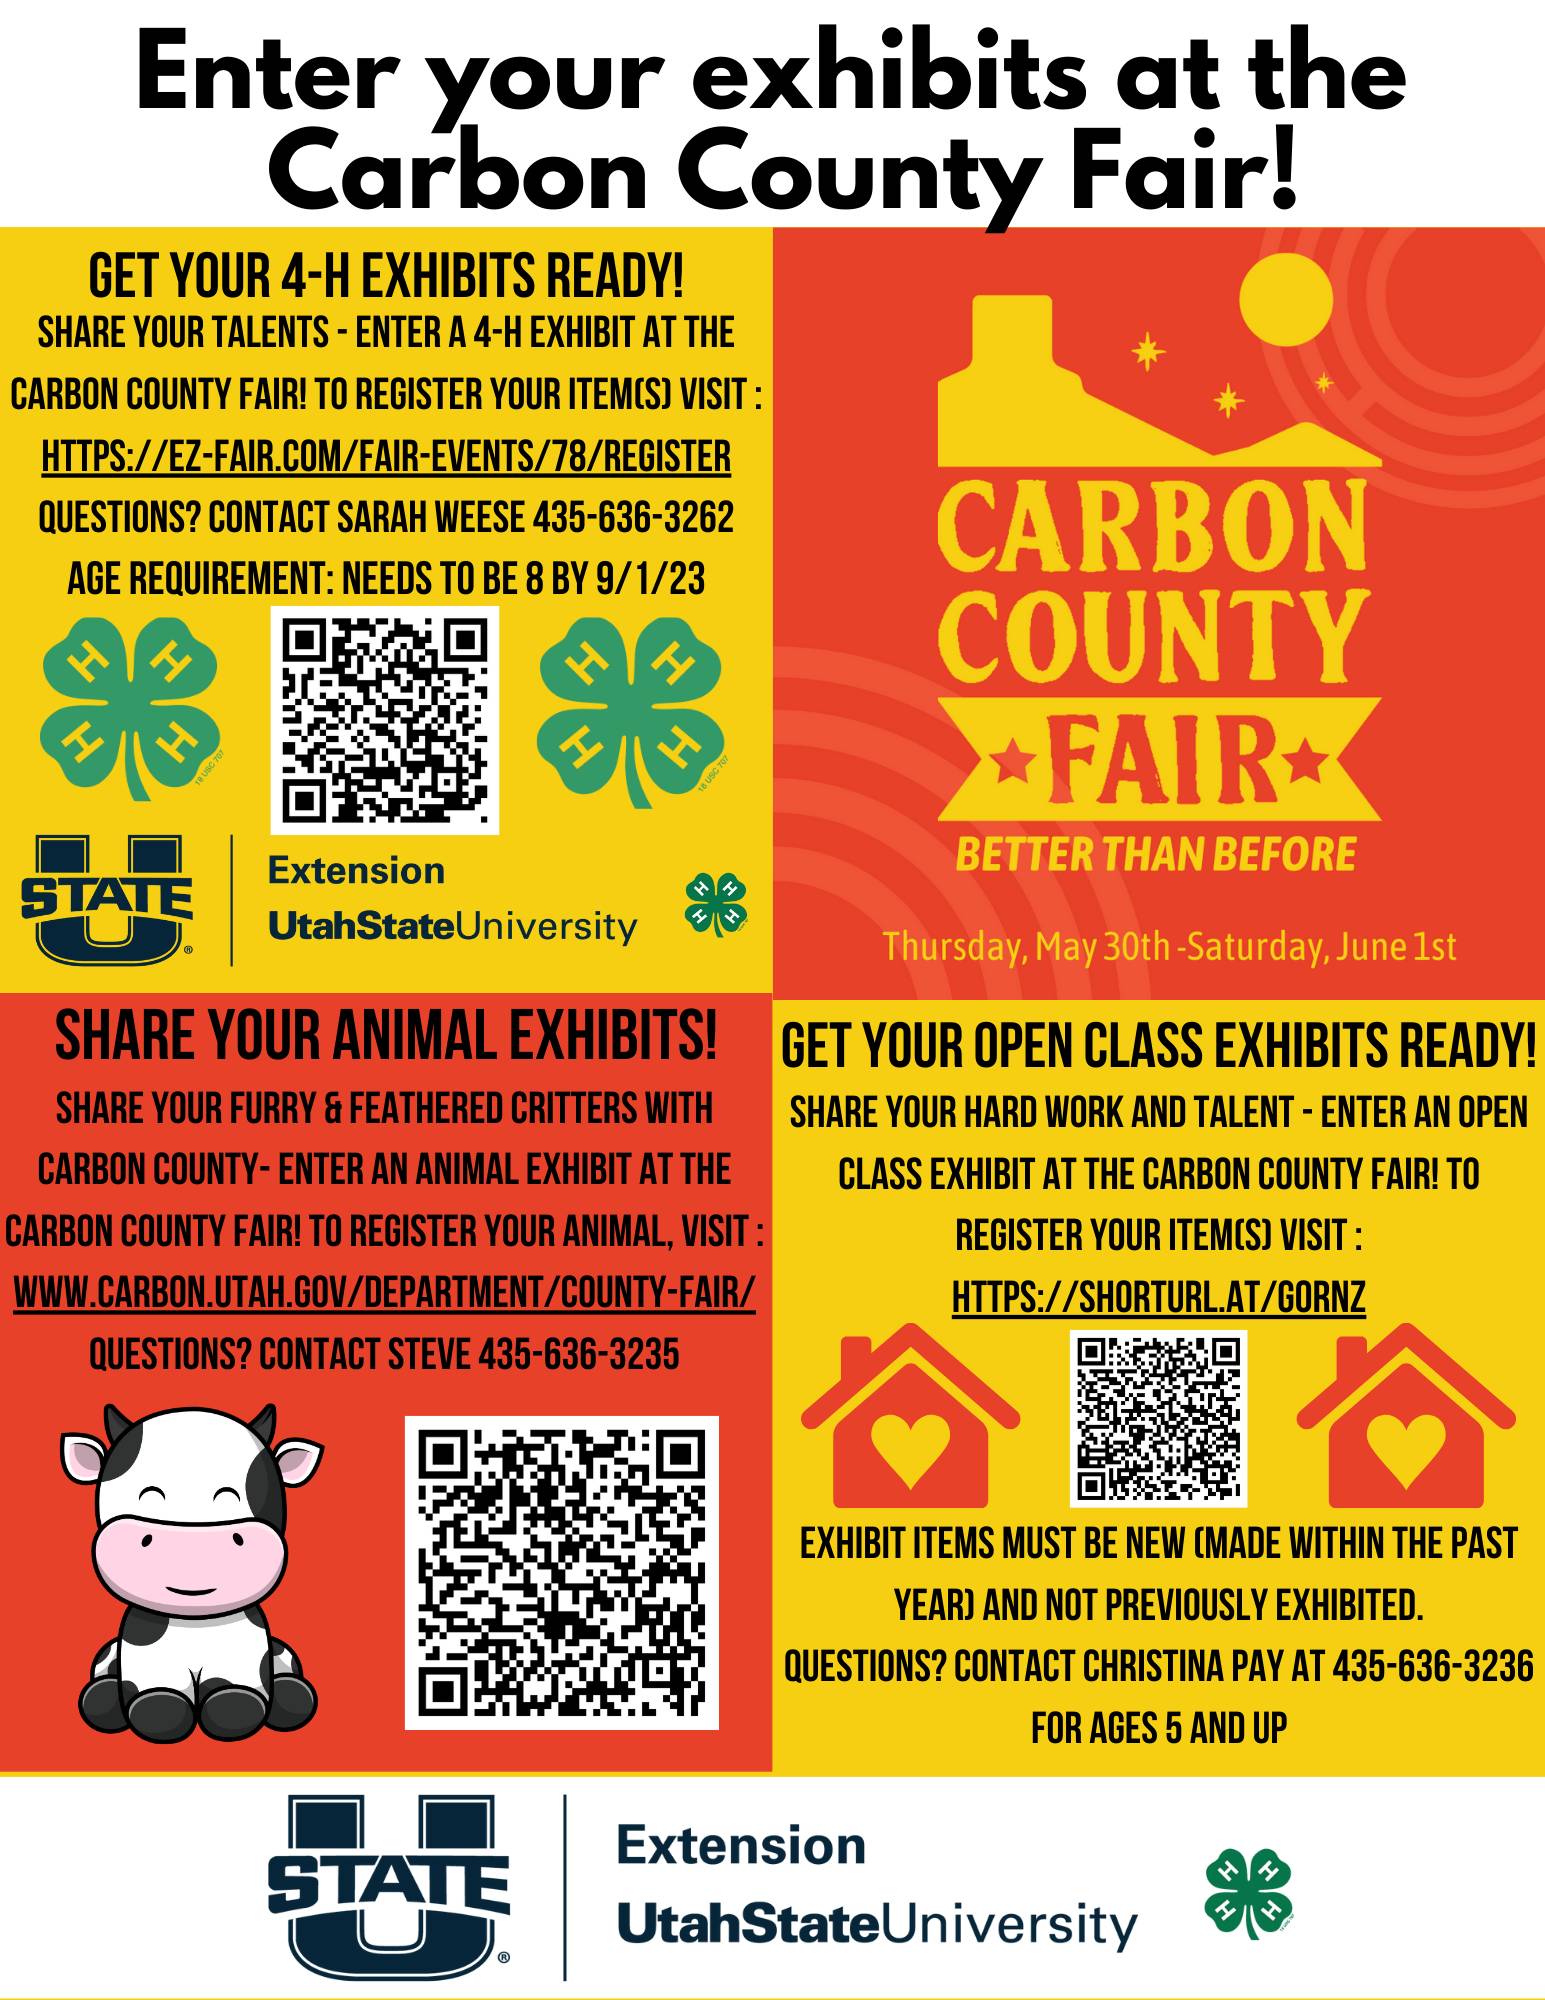 Carbon-County-Fair-Exhibit-Promotions-Flyer.jpg